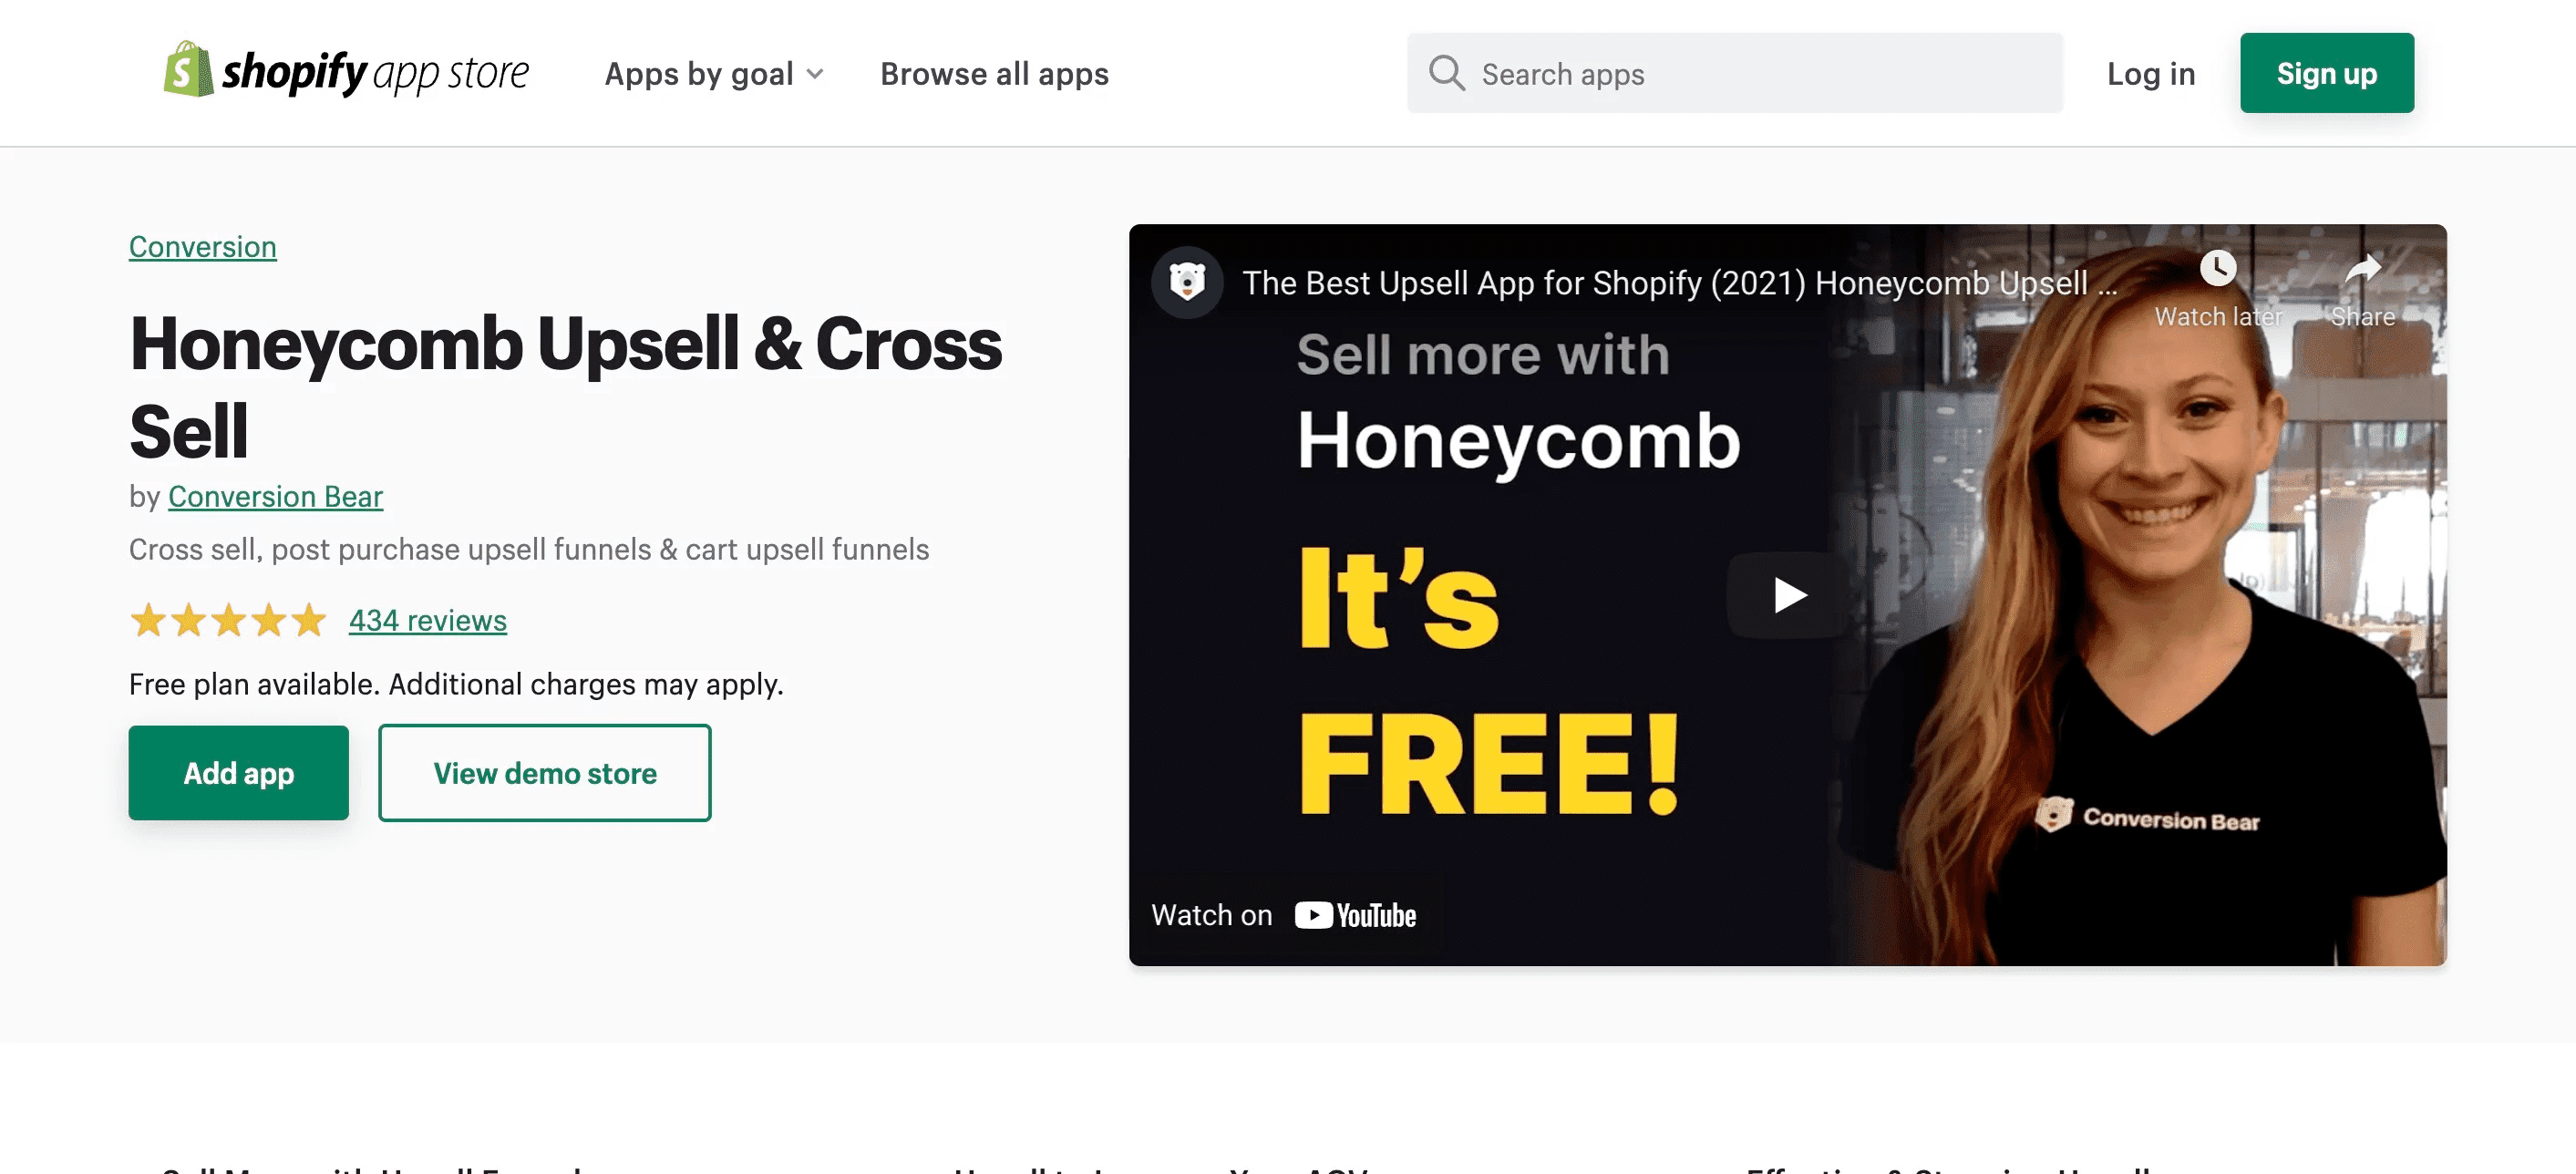 Honeycomb Upsell & Cross Sell